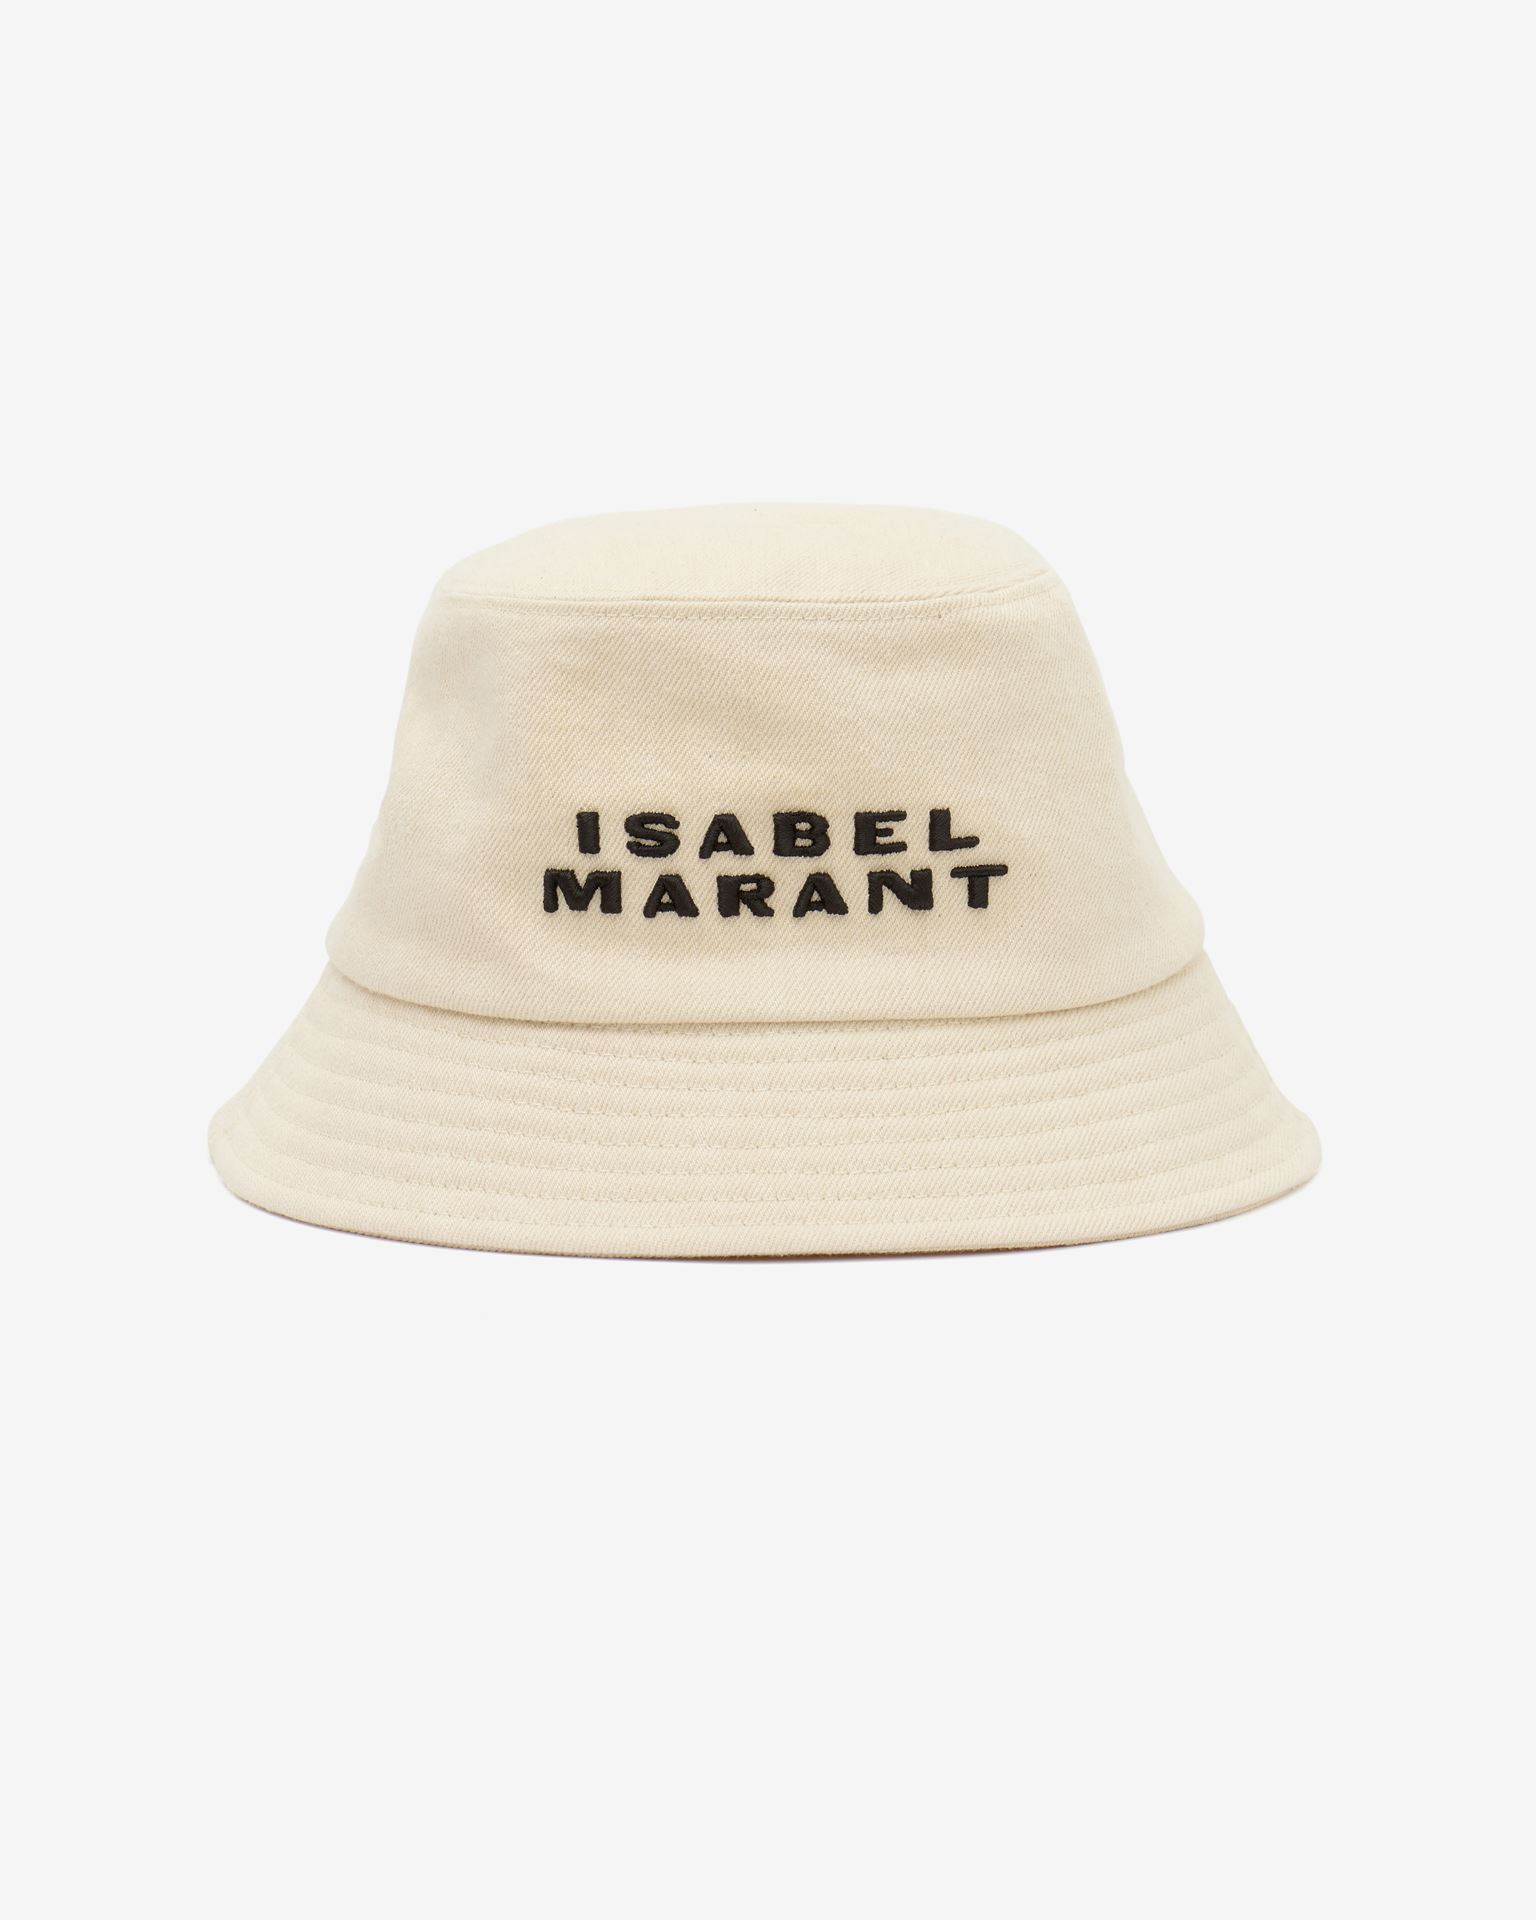 ISABEL MARANT HALEY LOGO HAT,46921212CR